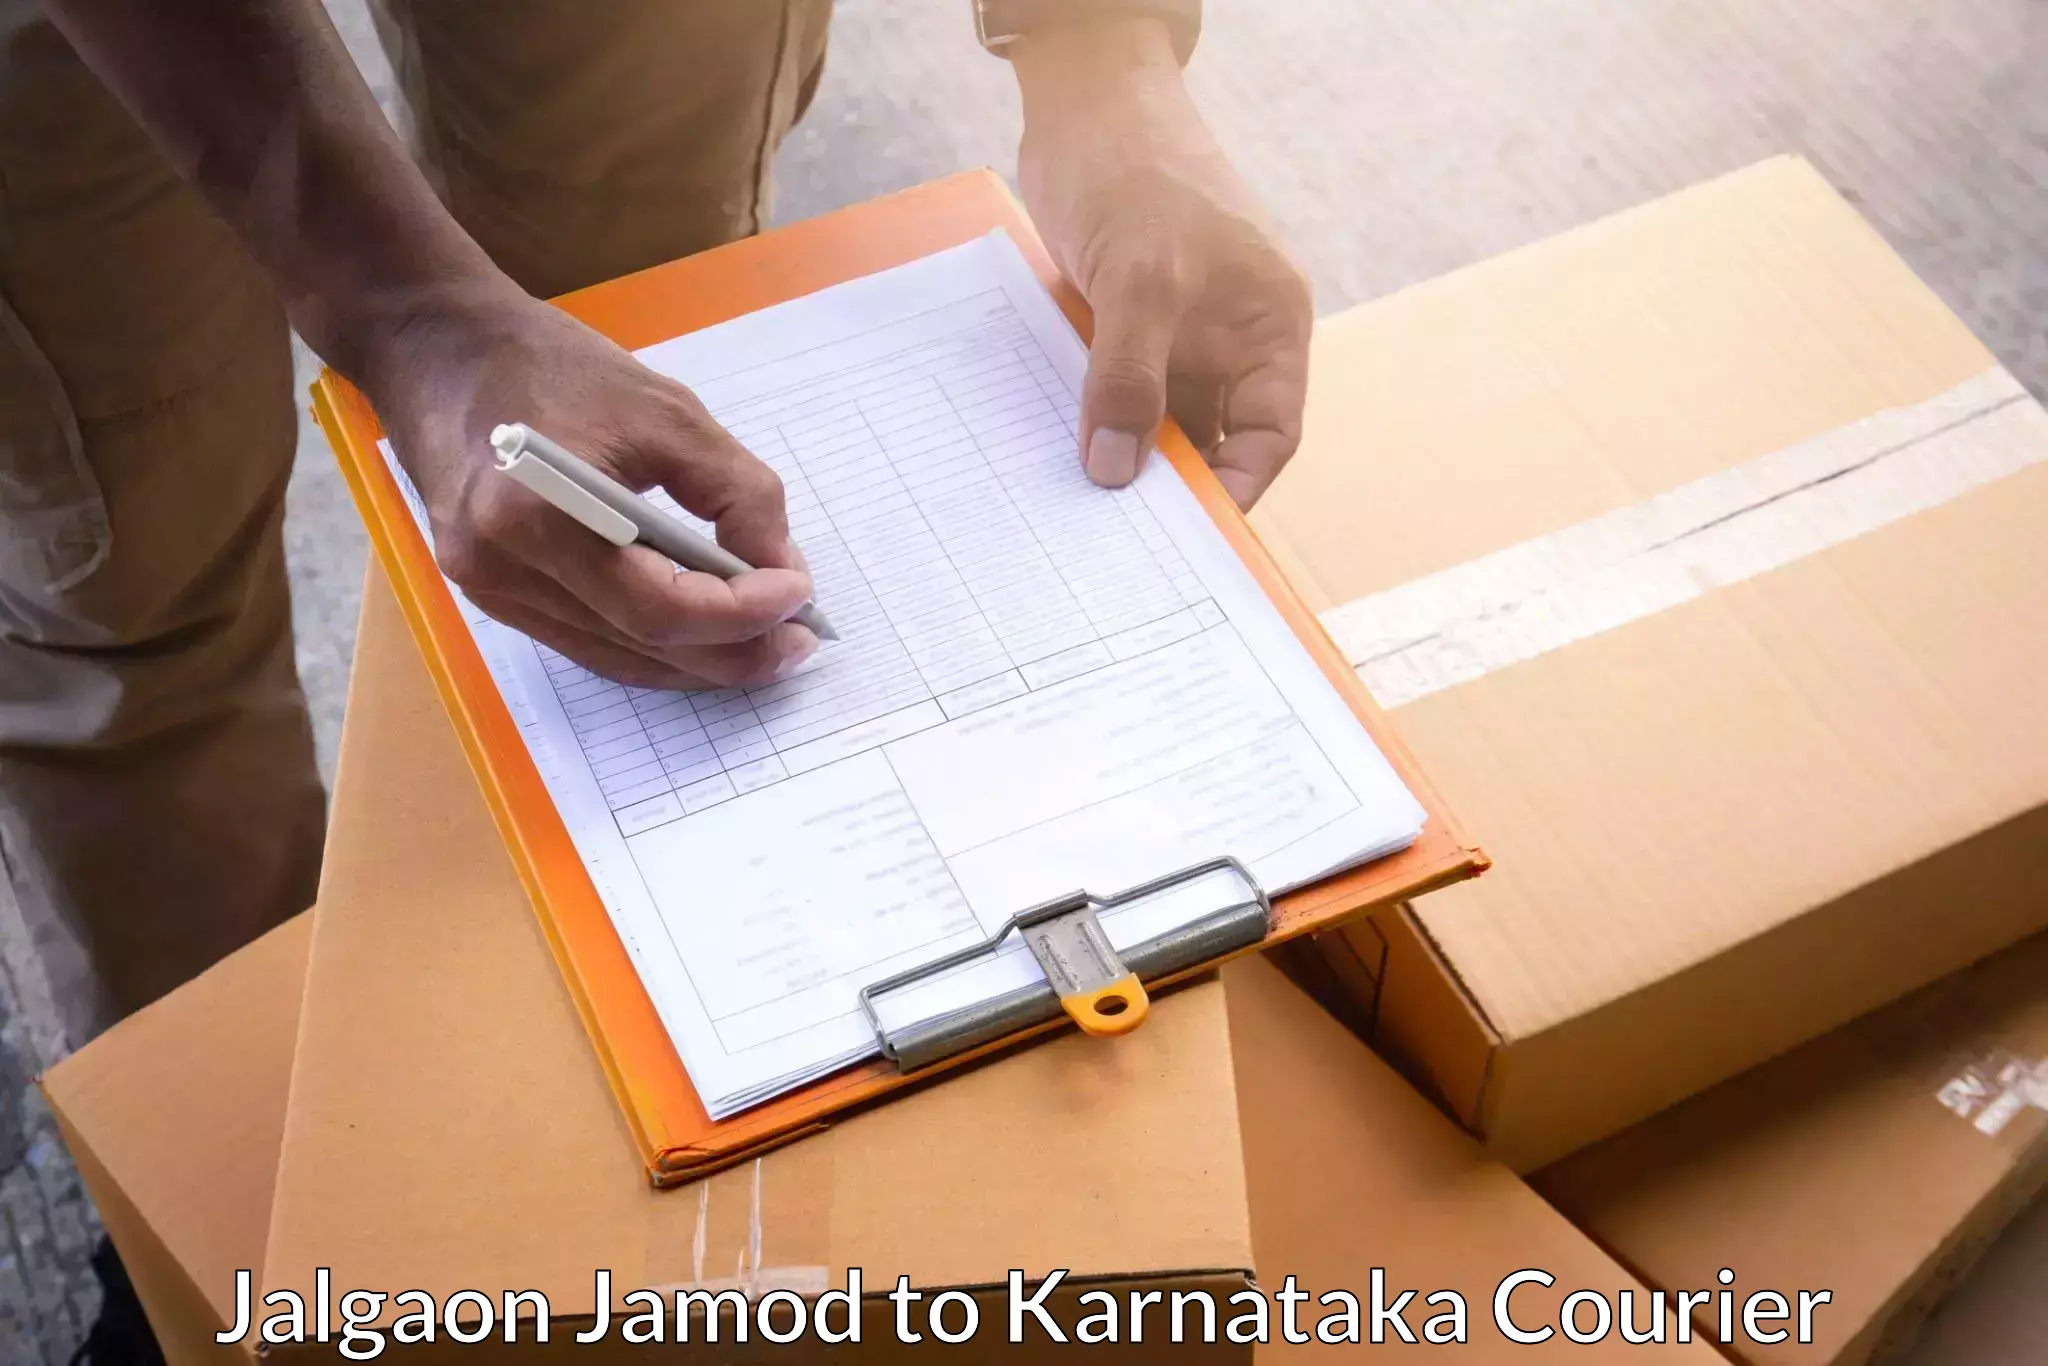 Nationwide parcel services Jalgaon Jamod to Munavalli